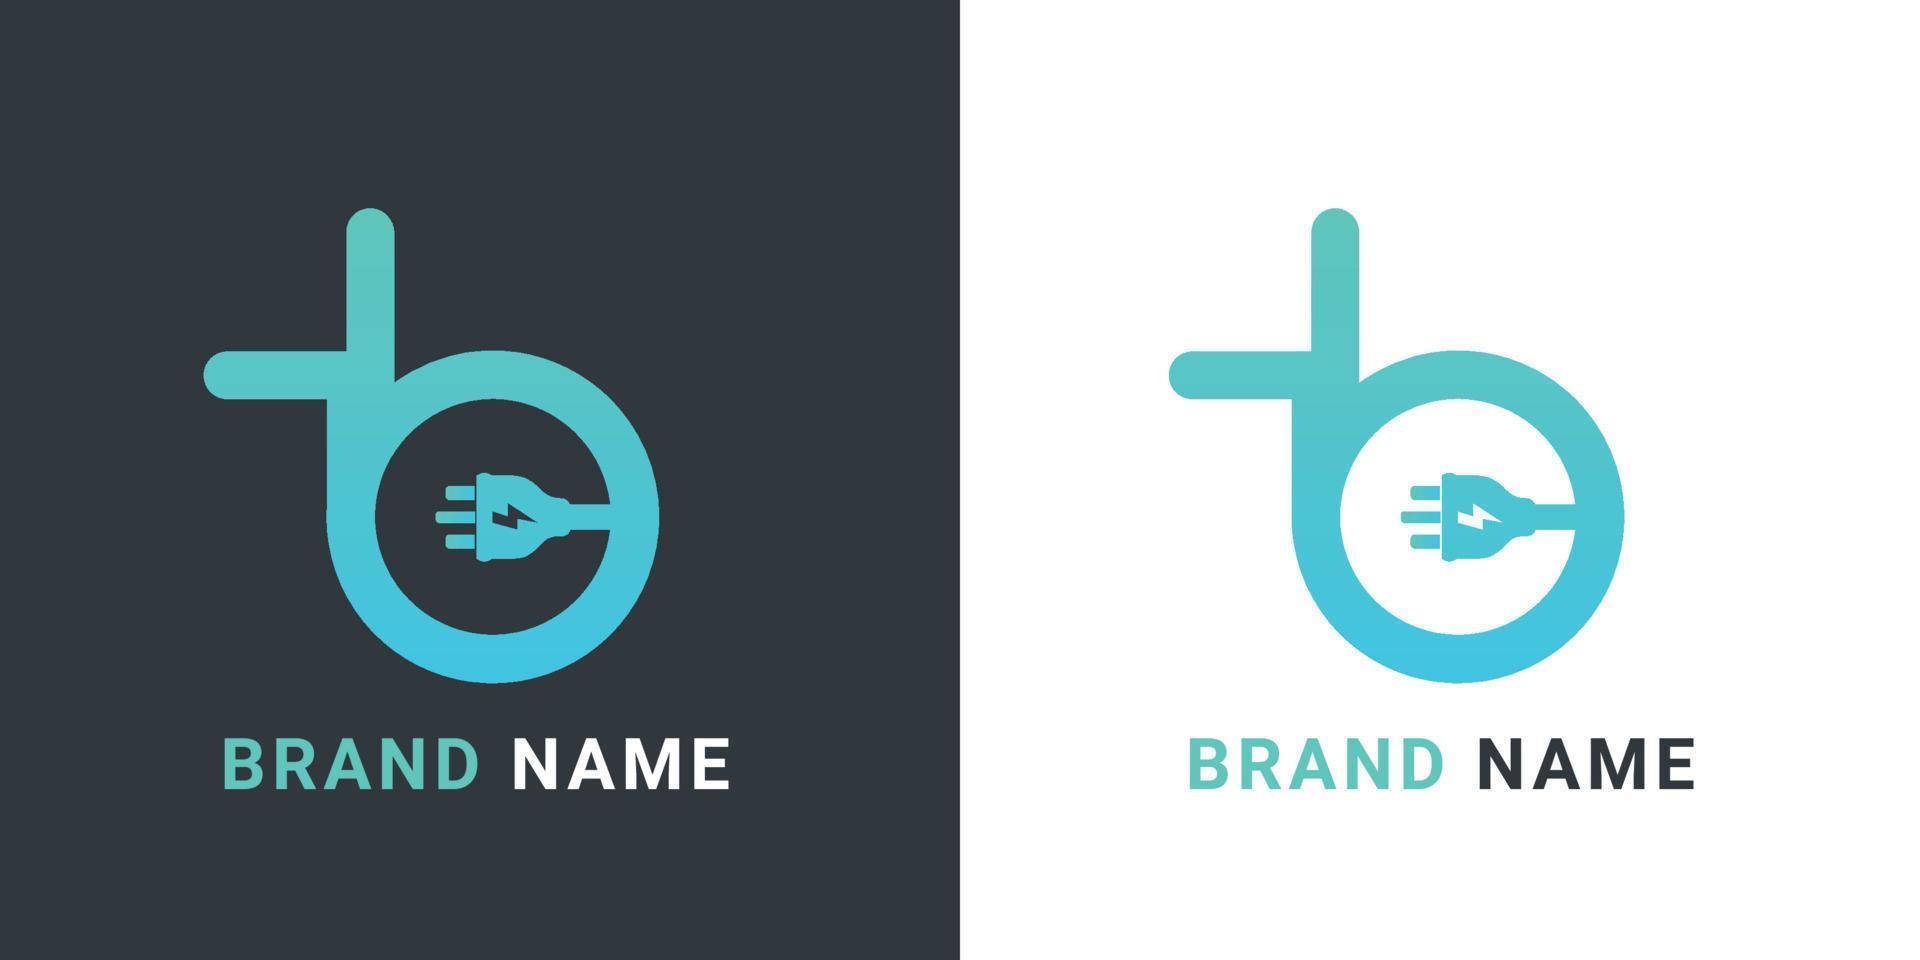 B plugin electric technology website and app modern brand logo design vector template